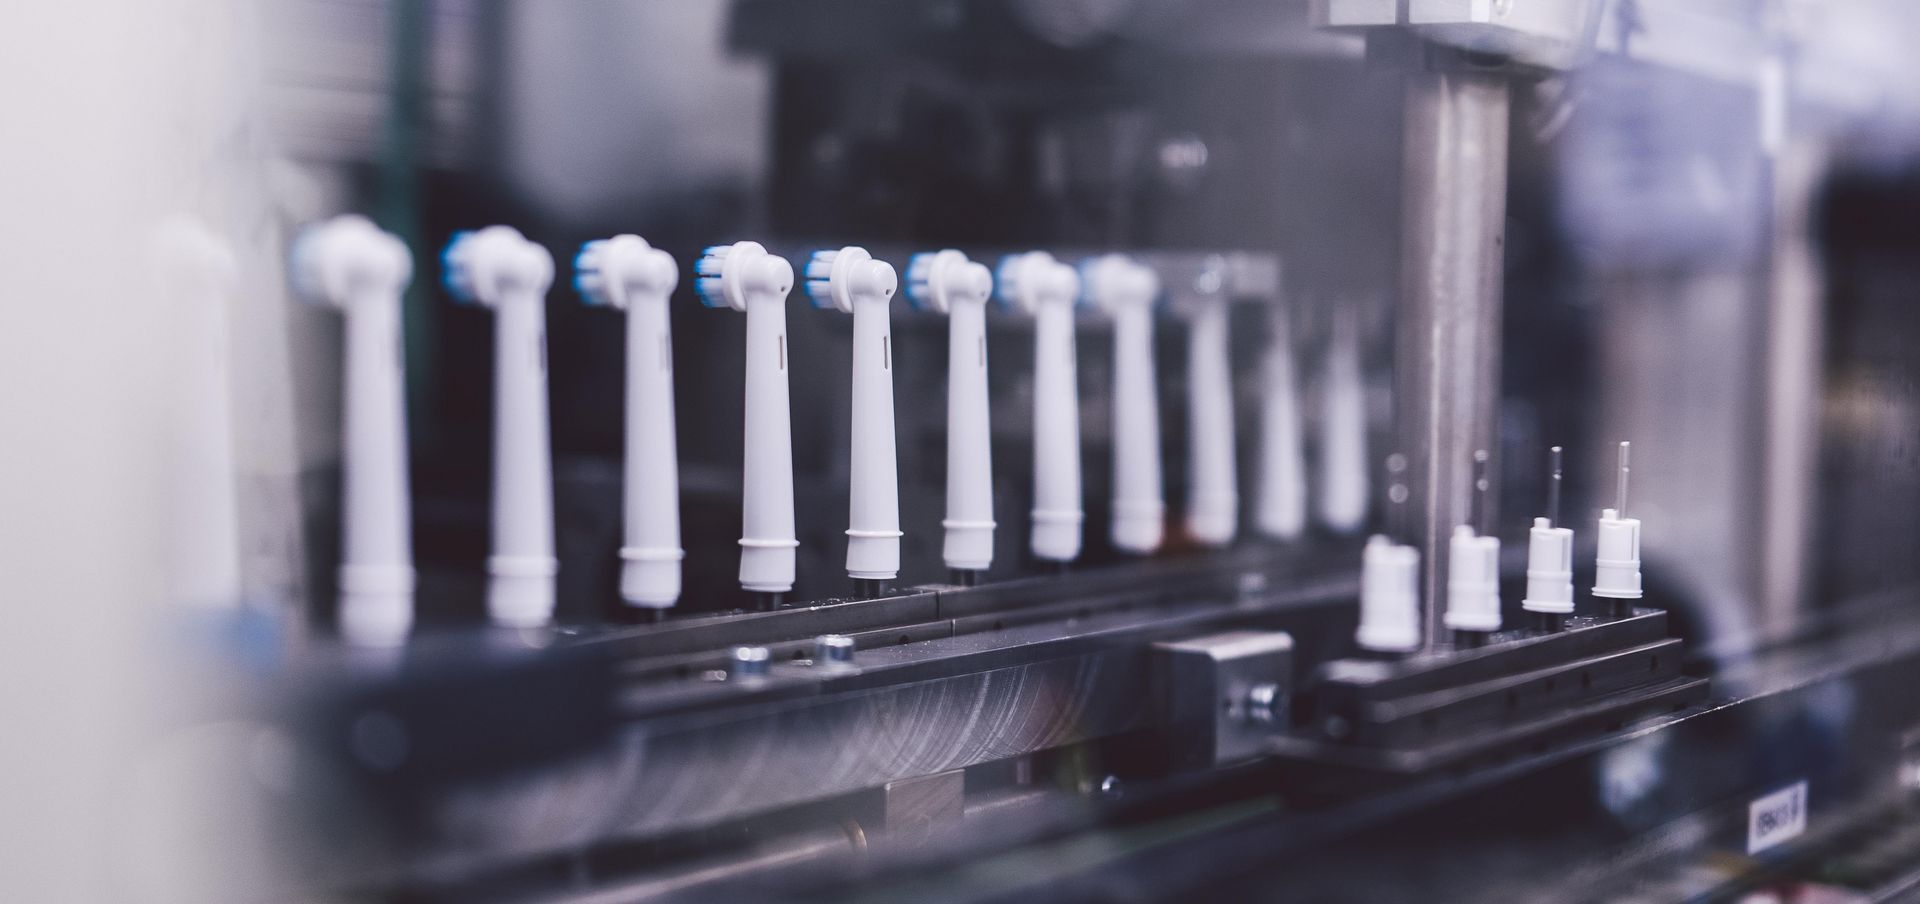 Procter & Gamble Reveals How 3D Printing Improves Its Manufacturing Operations – 3DPrint.com